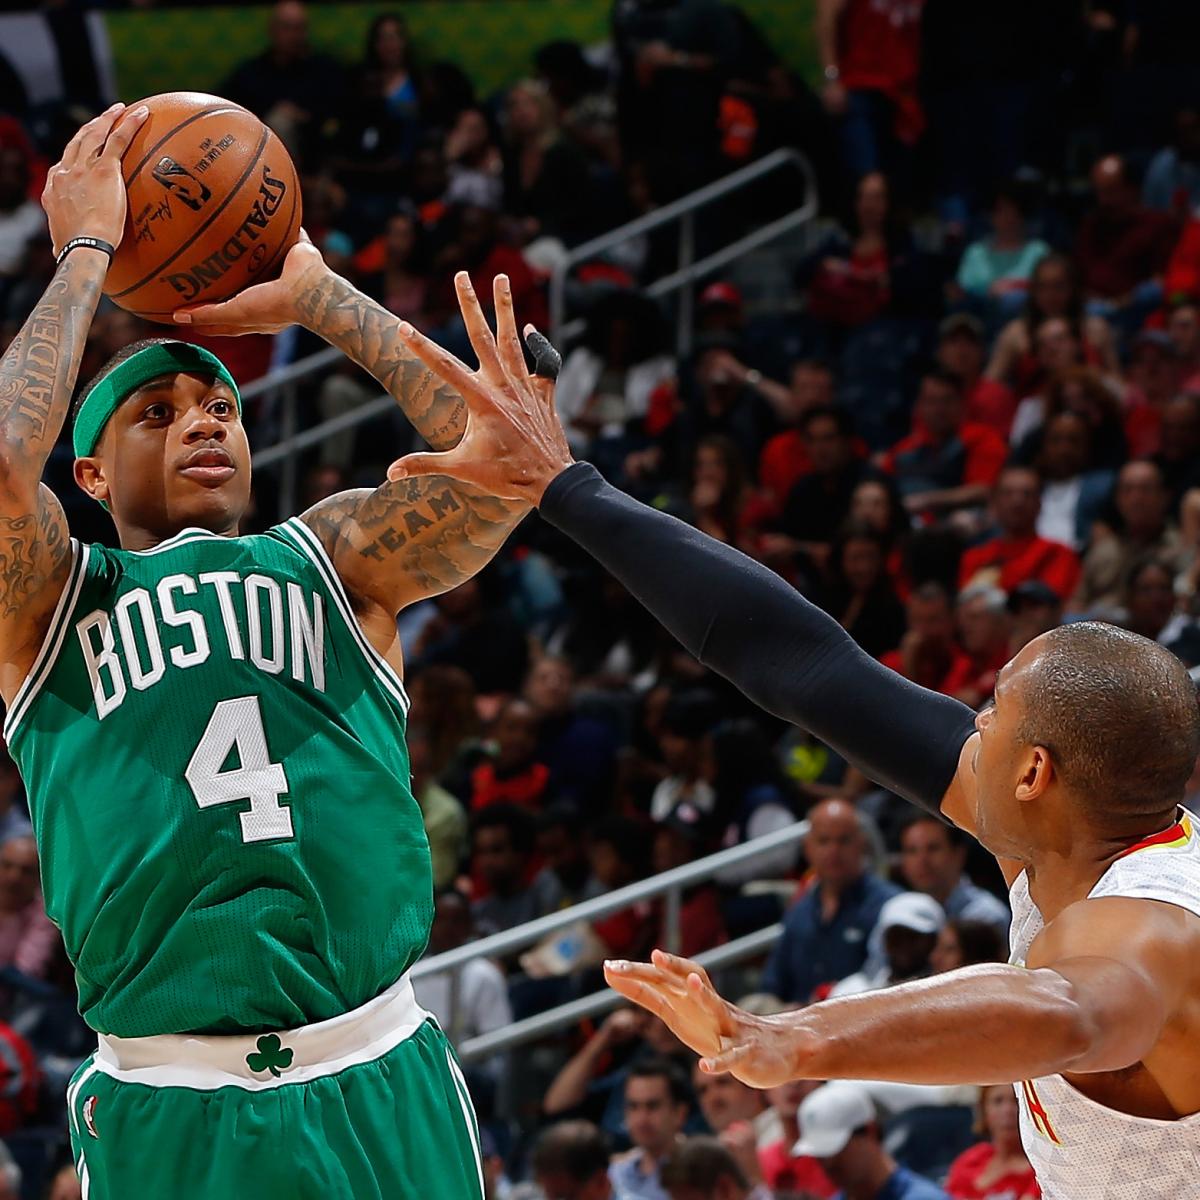 Atlanta Hawks vs. Boston Celtics Live Score, Analysis for Game 6